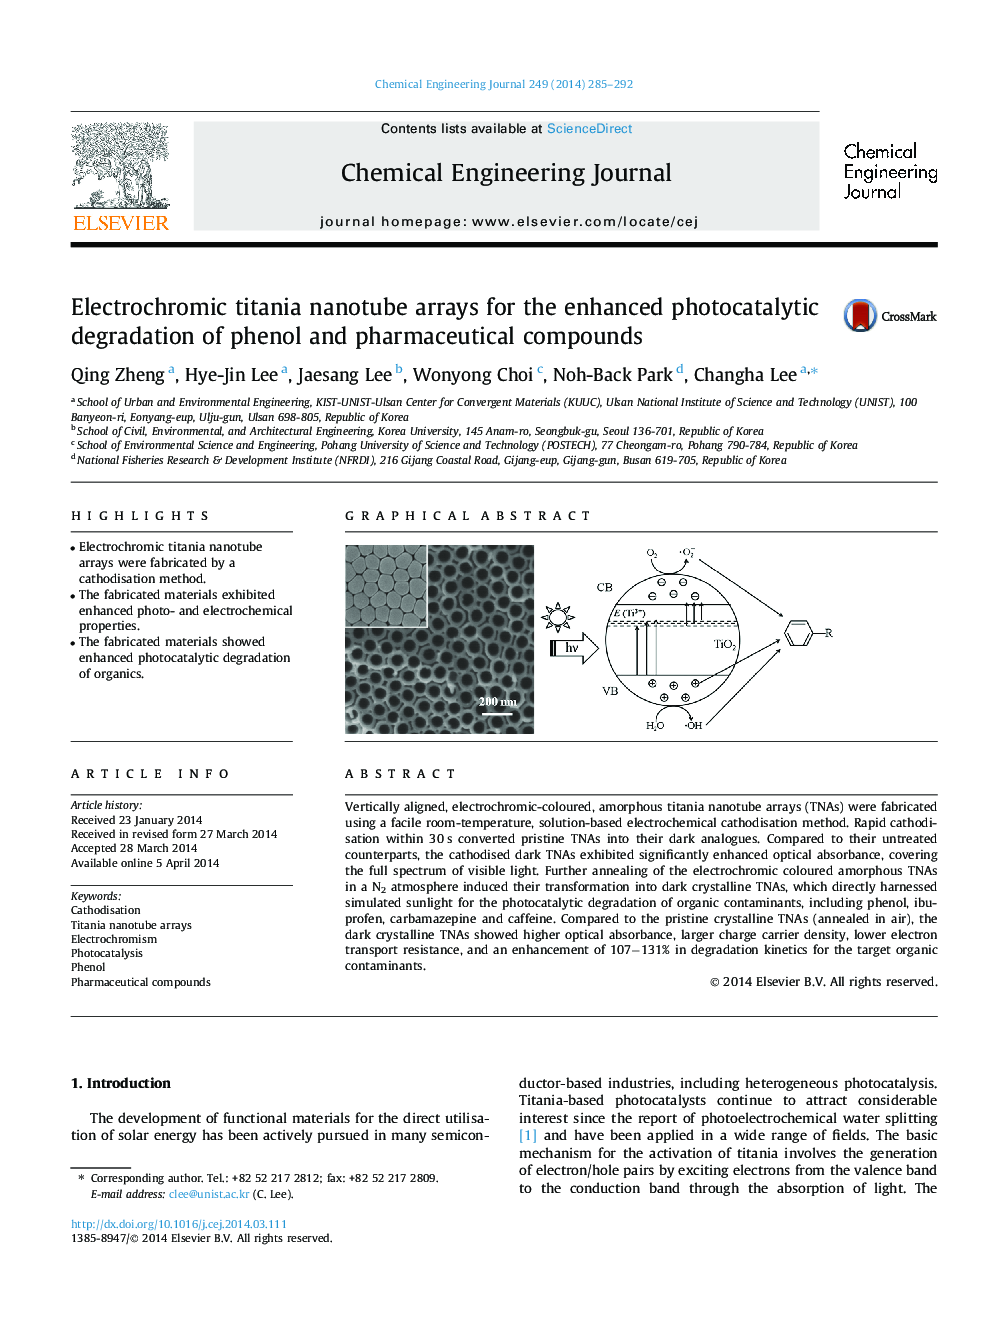 Electrochromic titania nanotube arrays for the enhanced photocatalytic degradation of phenol and pharmaceutical compounds